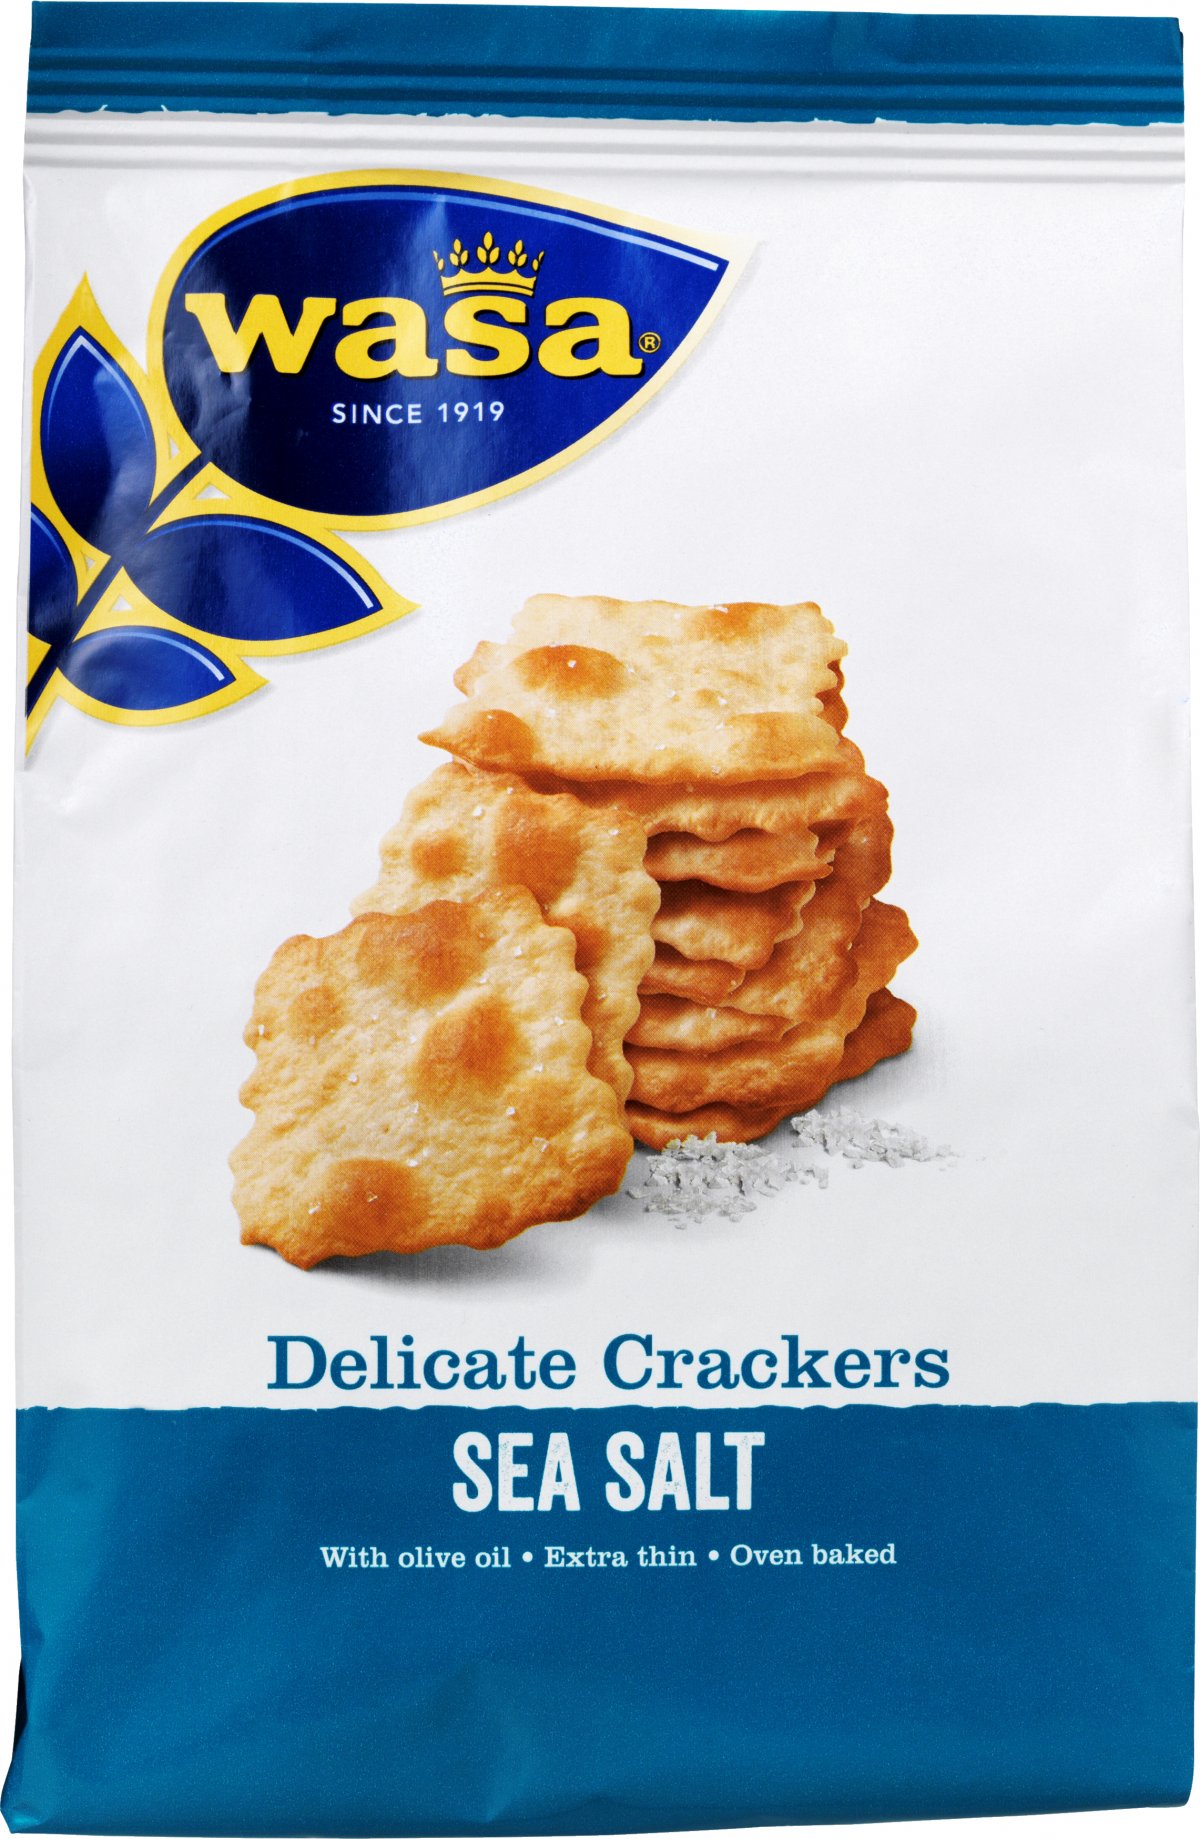 Wasa Delicate Crackers Sea Salt 180 g. - KIKS SMÅKAGER - MED MERE .DK